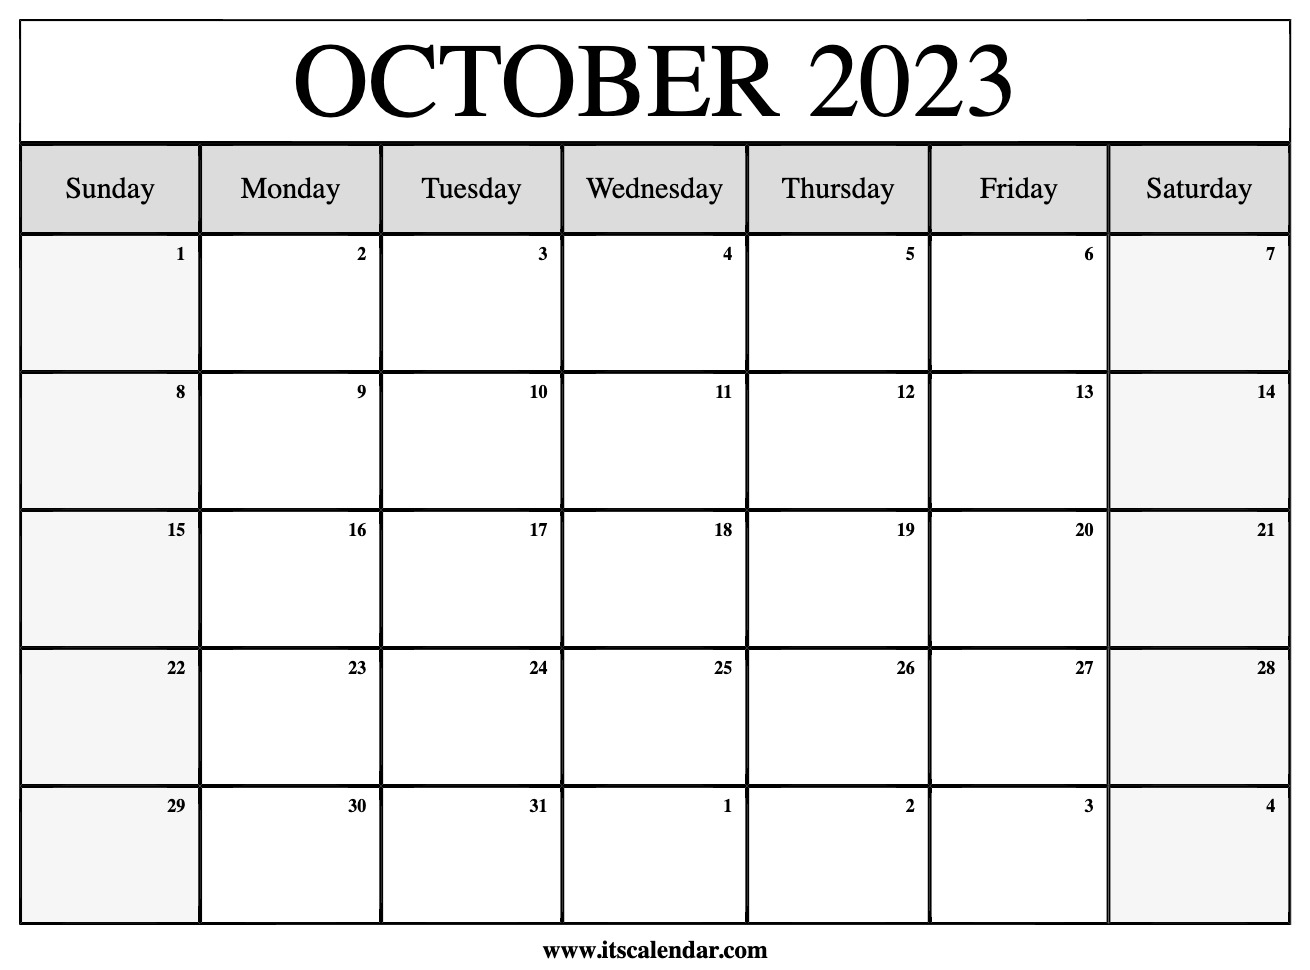 calendar-october-2023-october-2023-calendar-2023-simple-design-png